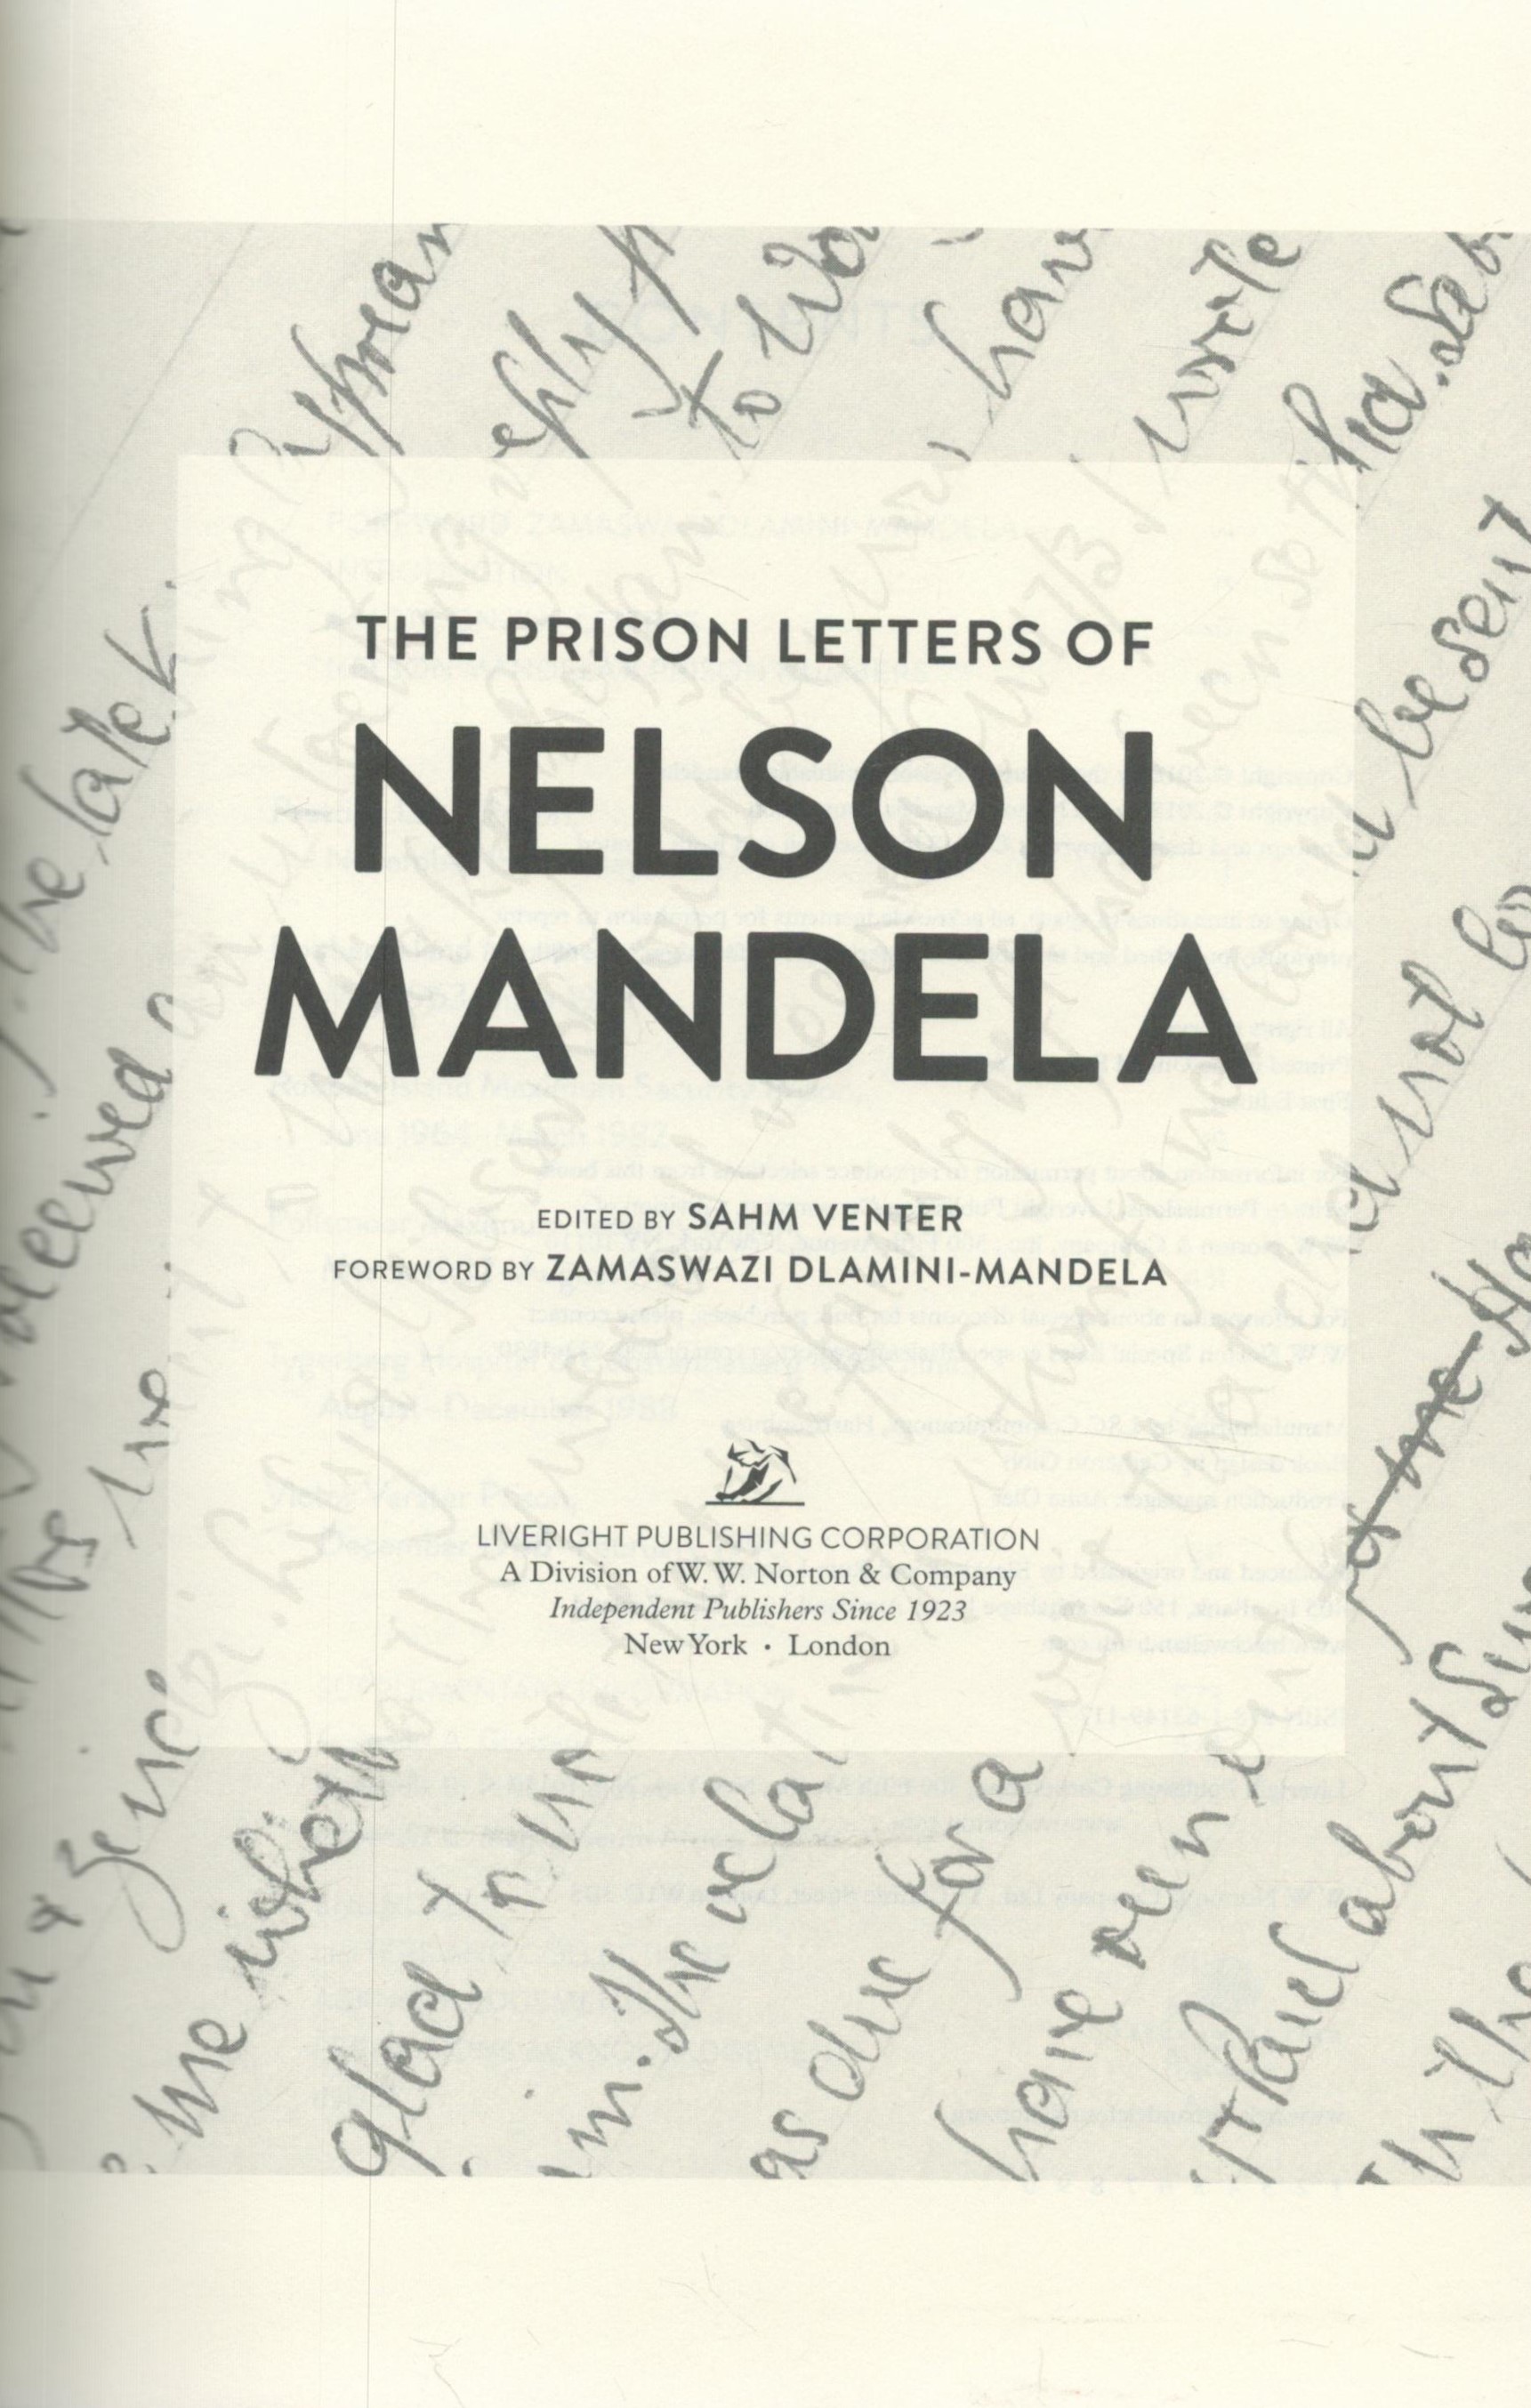 Nelson Mandela 1st Edition Hardback Book Titled The Prison Letters of Nelson Mandela. Published in - Image 2 of 3